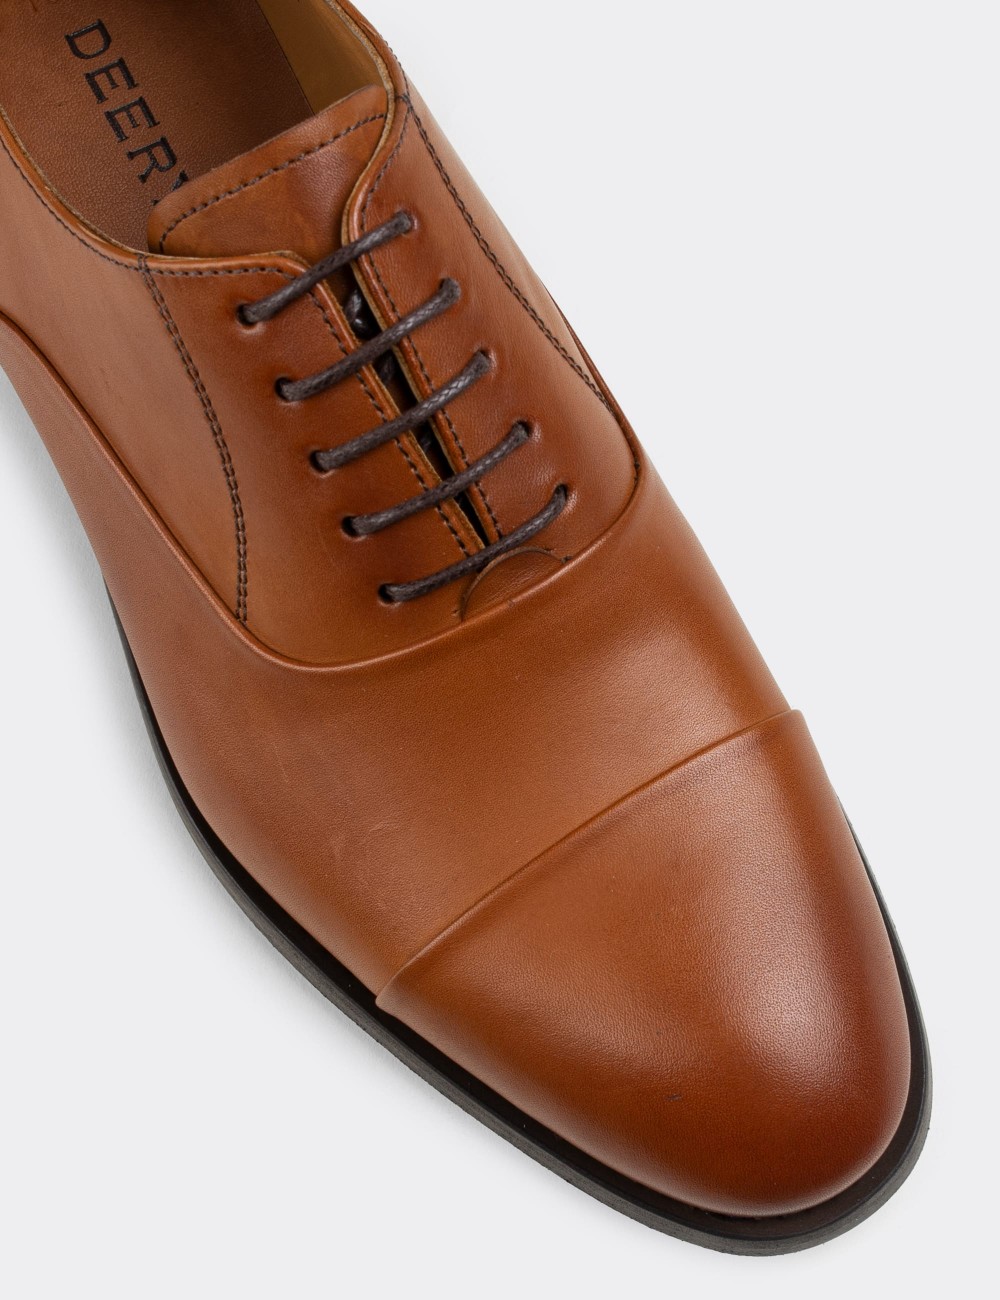 Tan  Leather Classic Shoes - 64410MTBAK02